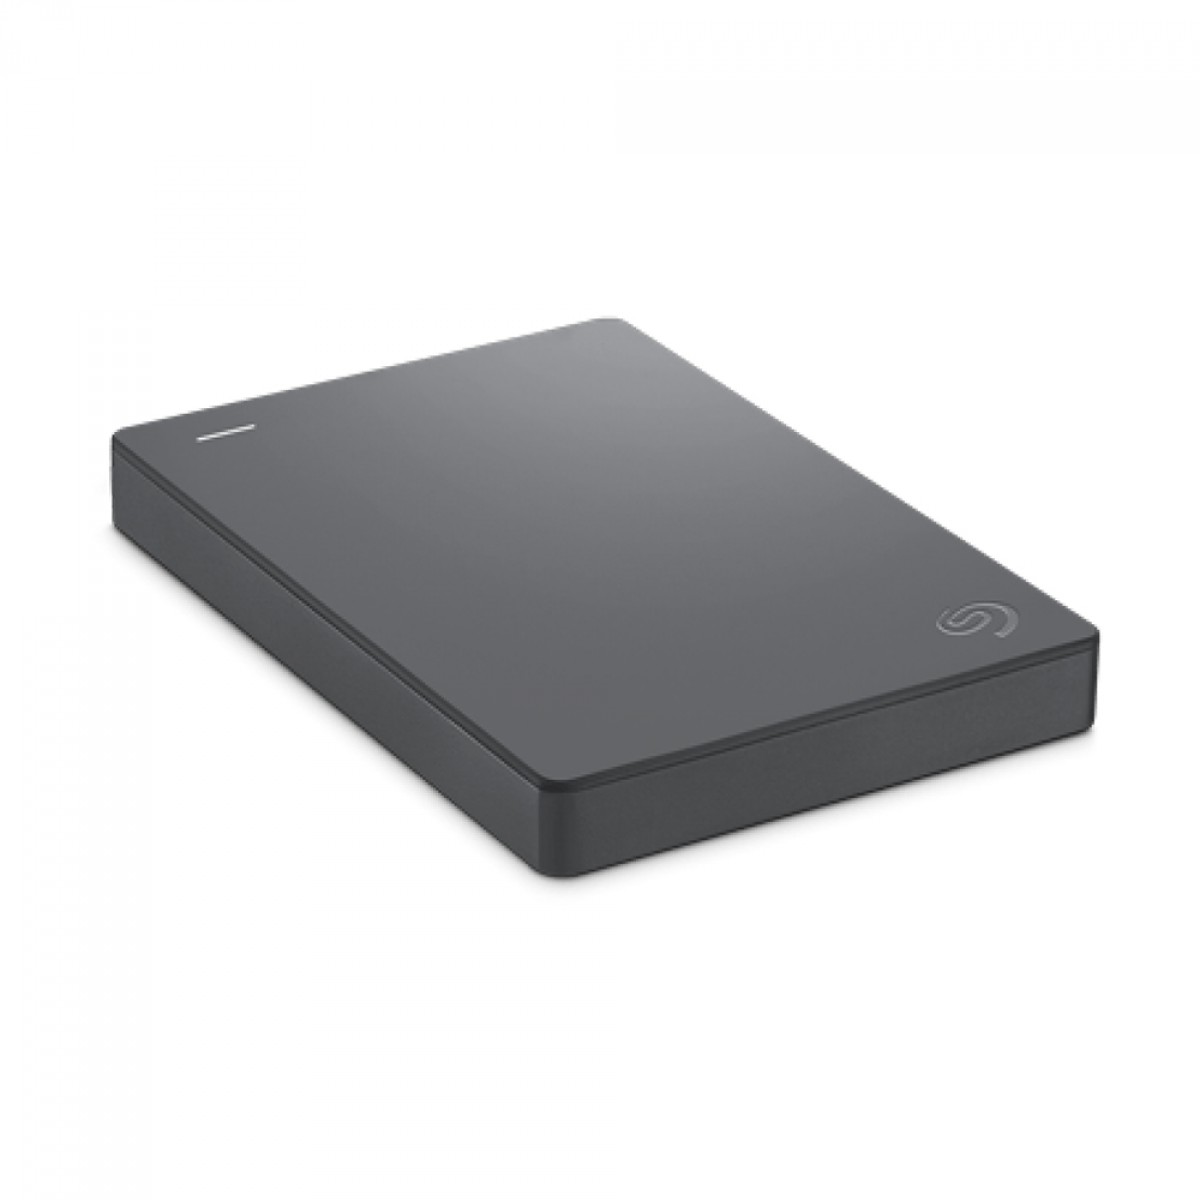 HD Externo Portátil Seagate Basic, 4TB, USB 3.0, Black, STJL4000400